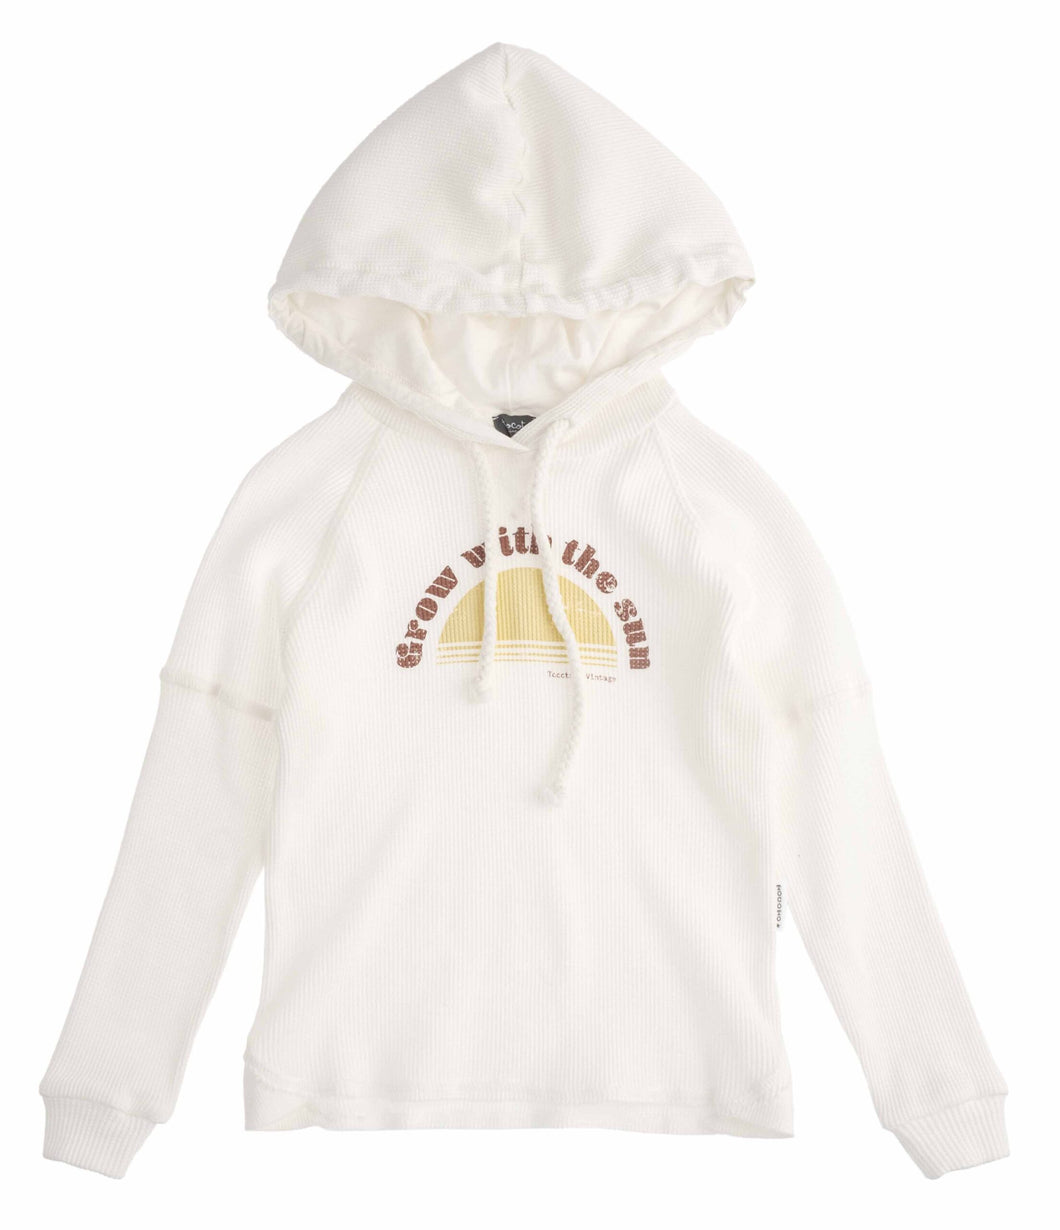 Organic cotton hooded sweatshirt